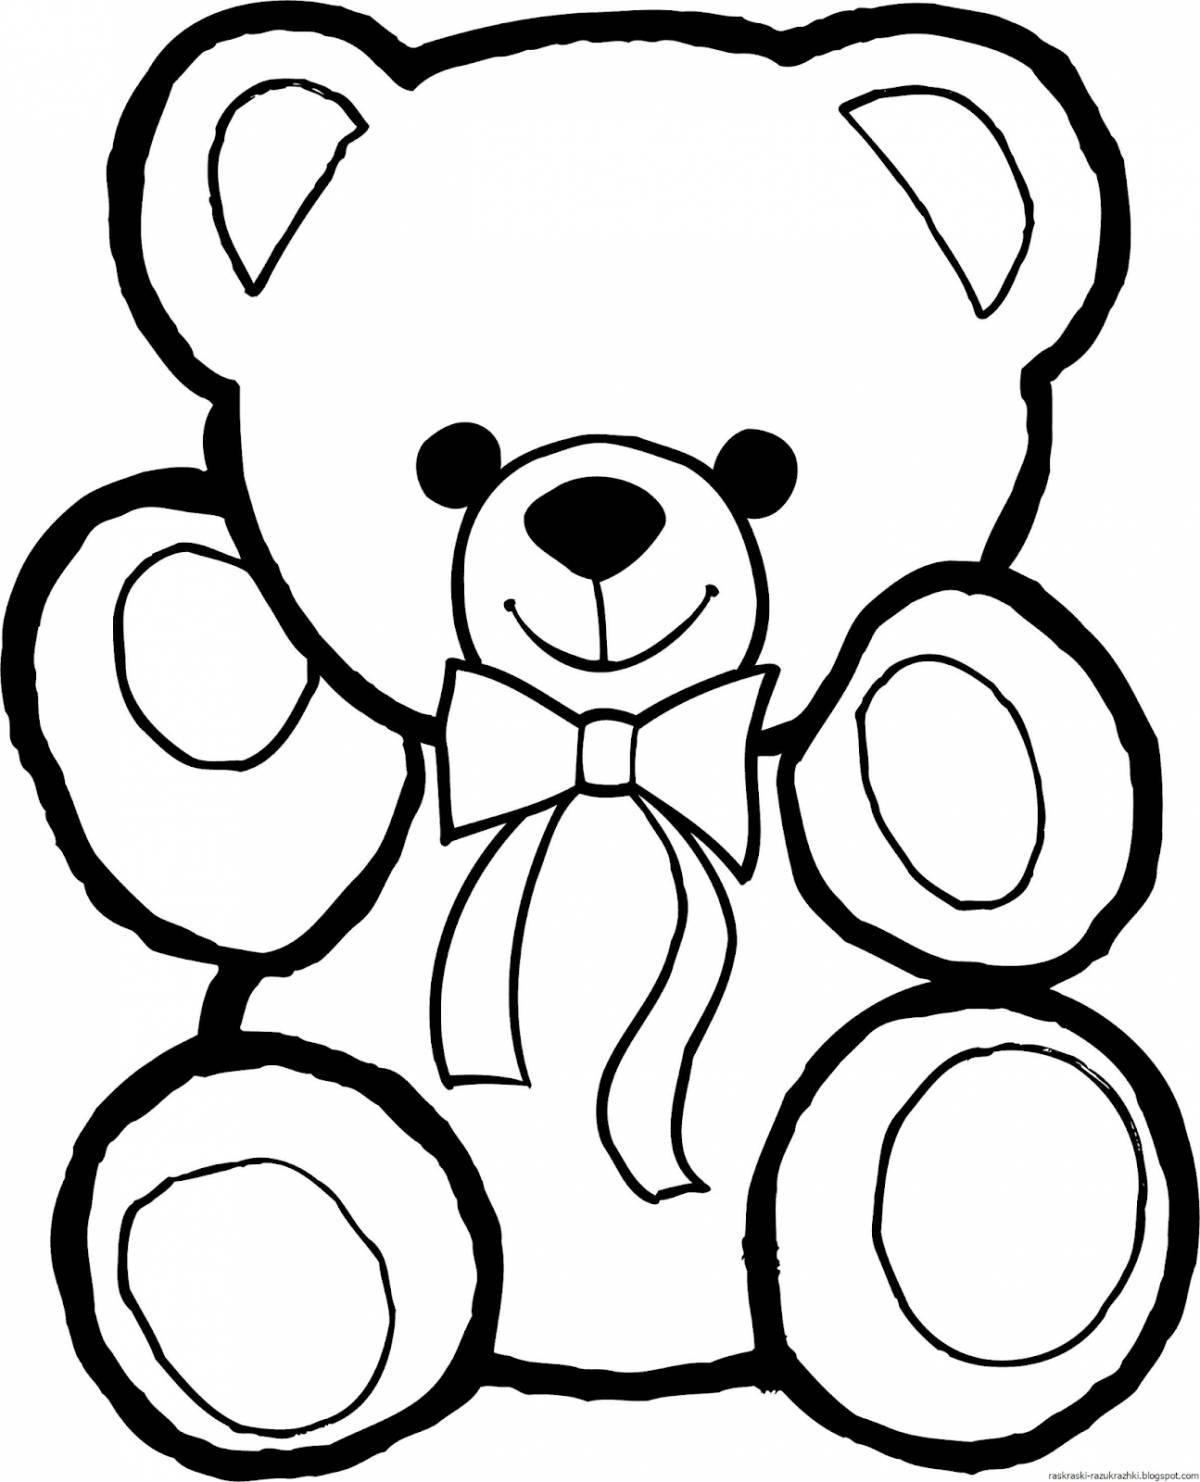 Coloring playful teddy bear